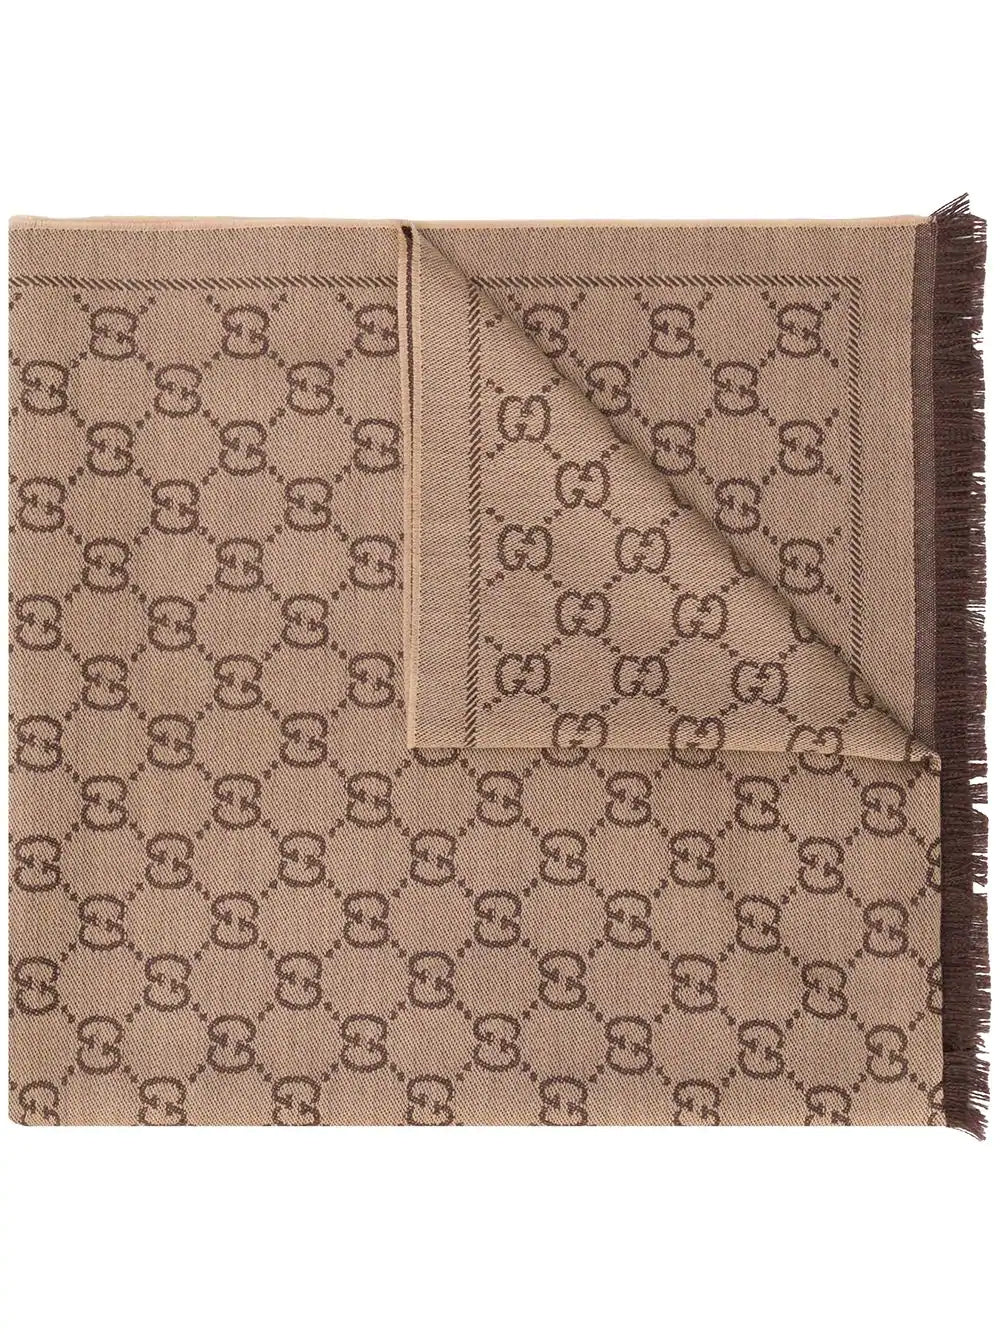 GG jacquard pattern knitted scarf